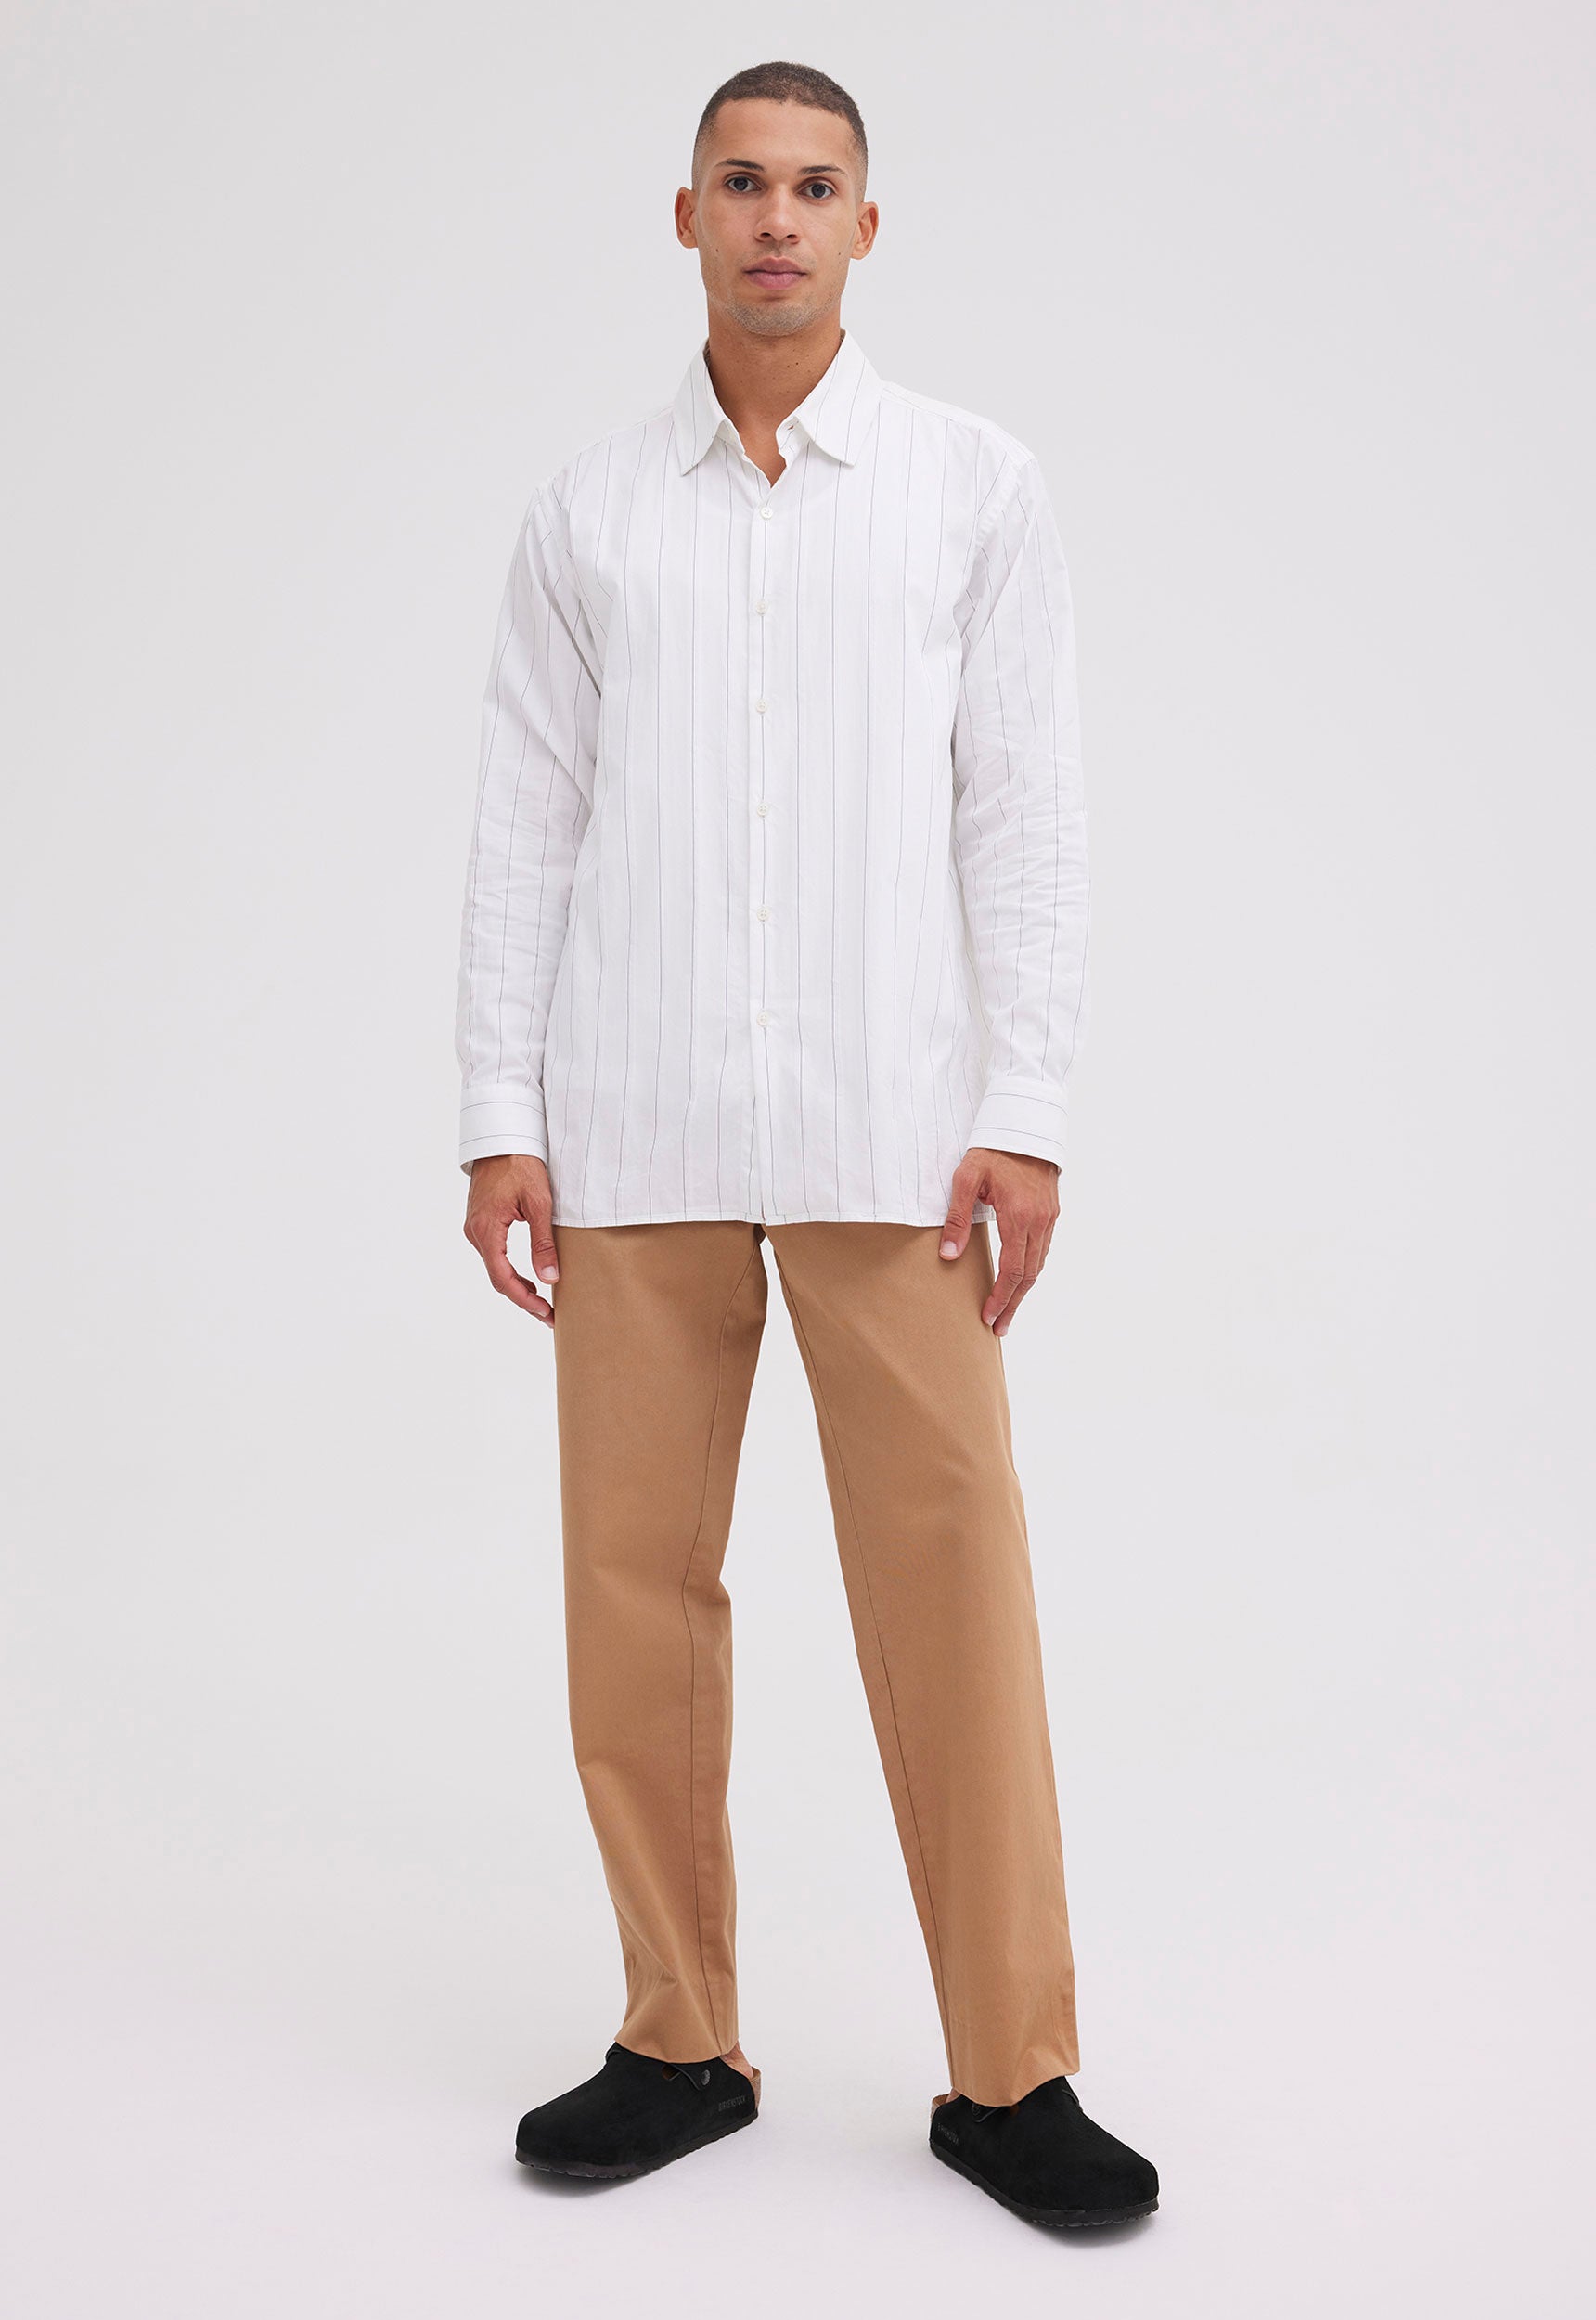 Doran Shirt in White/Navy Stripe